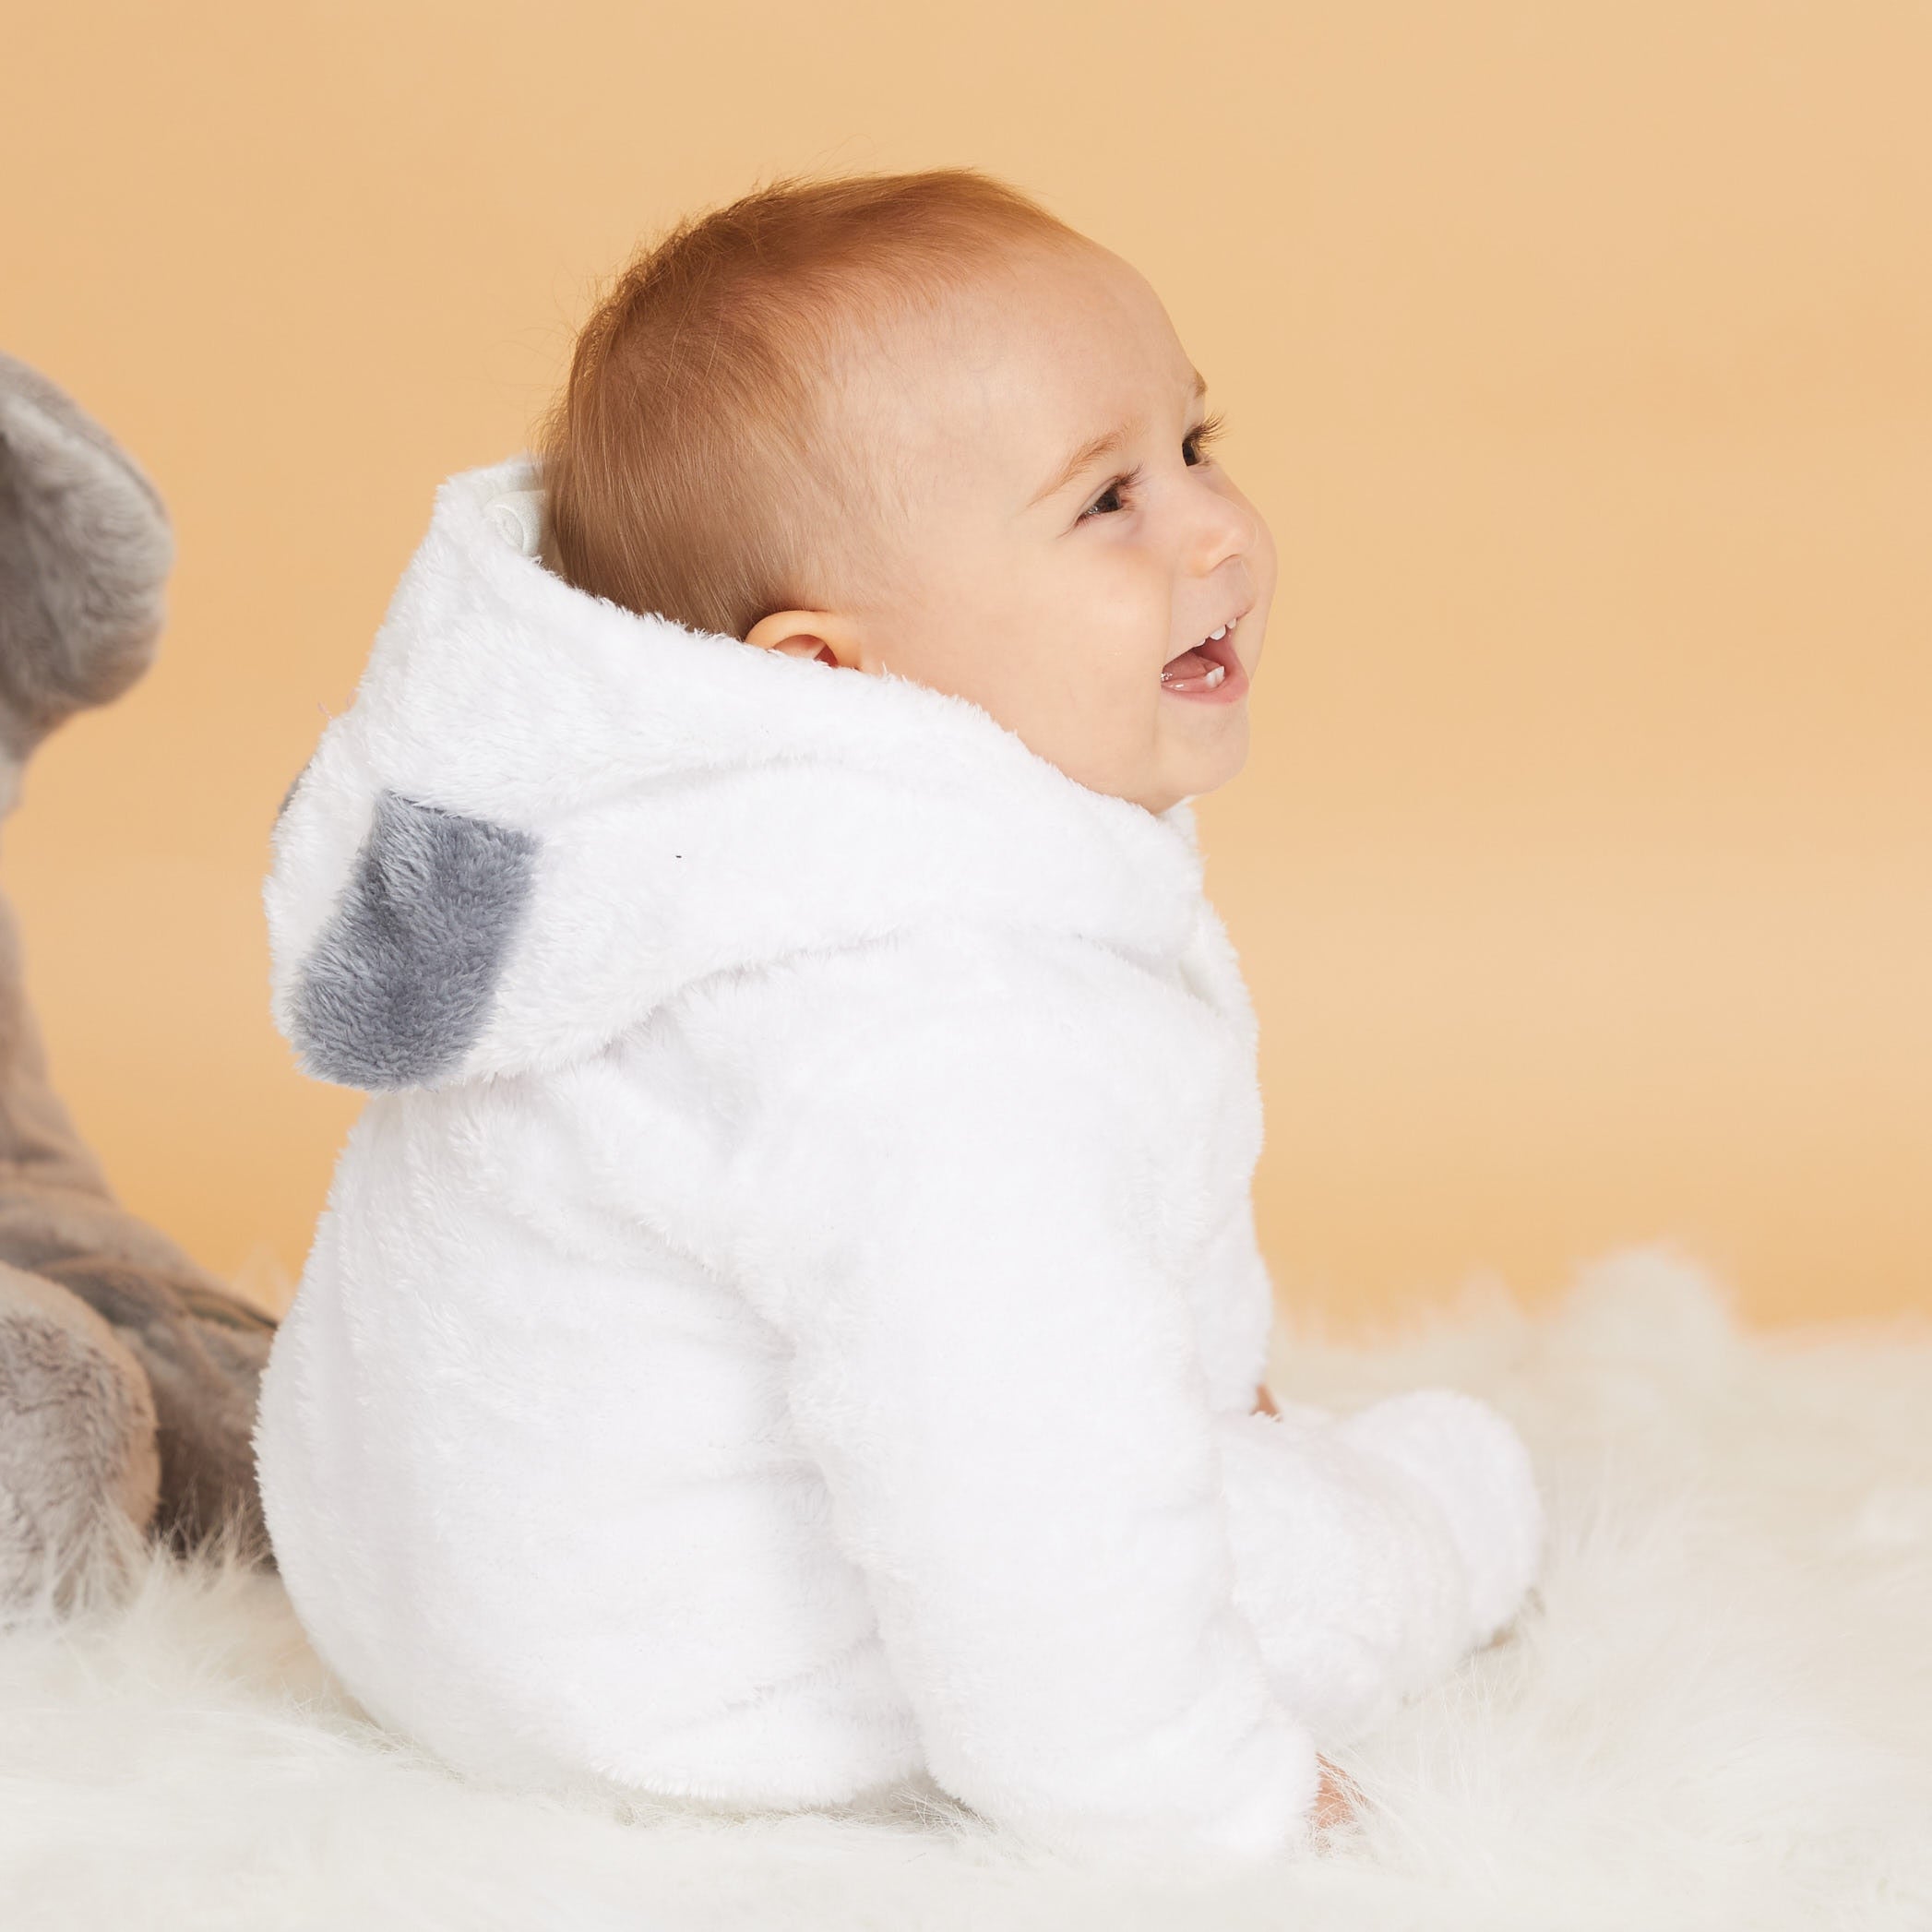 New Winter Warm Cotton Casual Newborn Hooded Romper